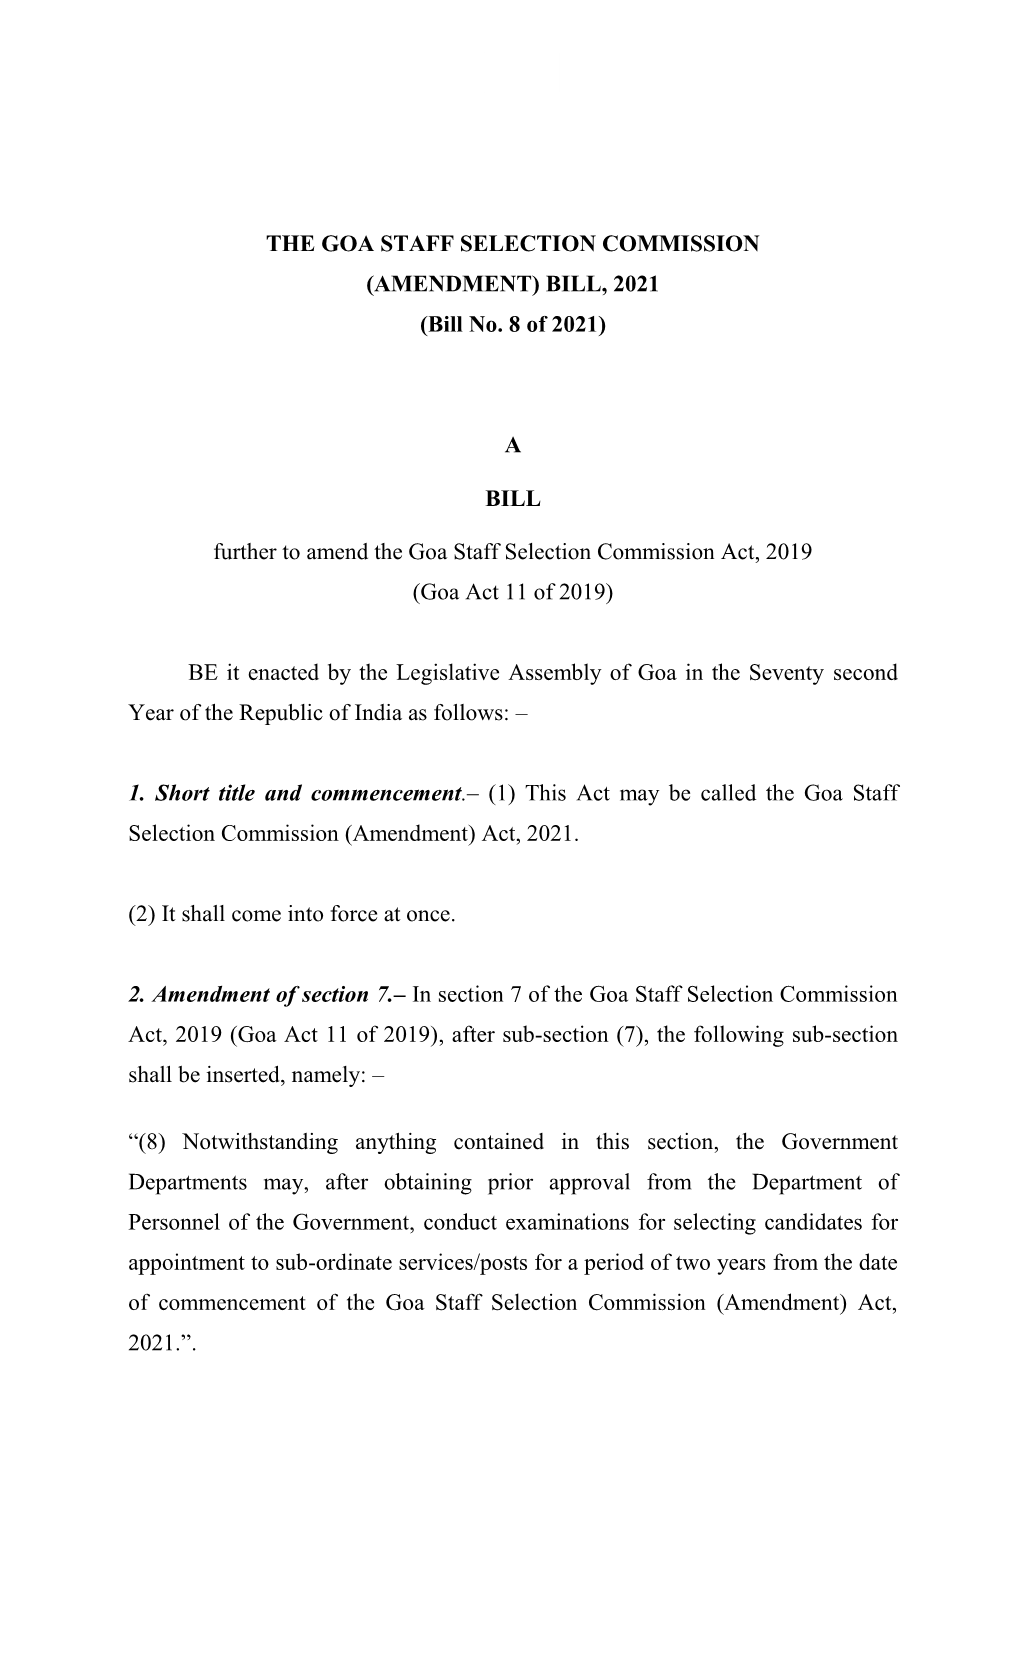 THE GOA STAFF SELECTION COMMISSION (AMENDMENT) BILL, 2021 (Bill No